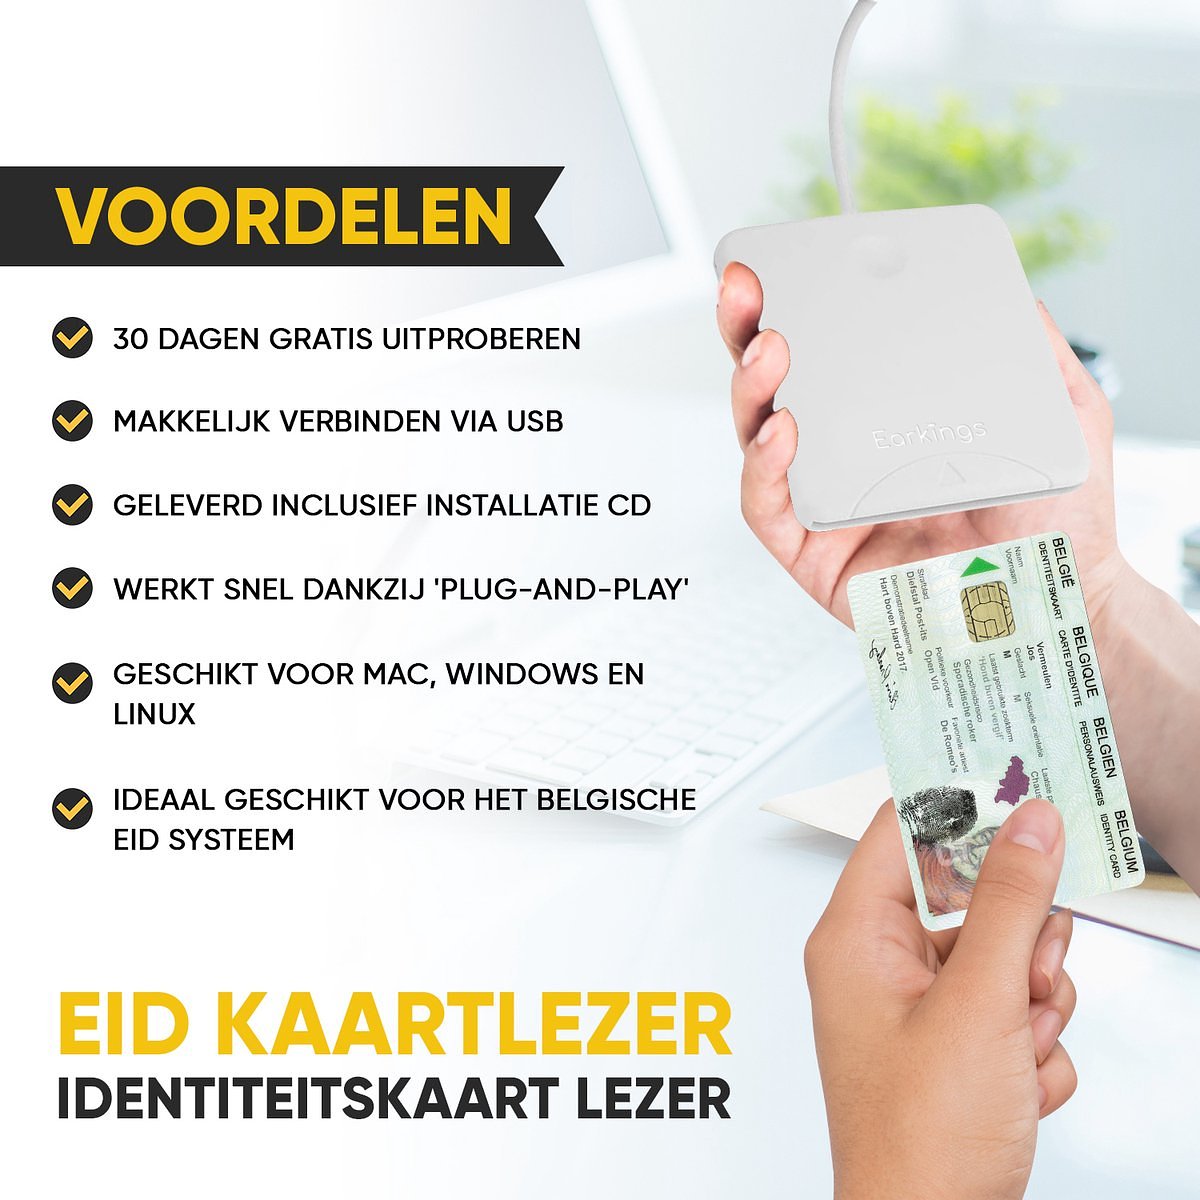 eID Kaartlezer Identiteitskaartlezer - Card Reader voor Identiteitskaart, CreditCards en overige